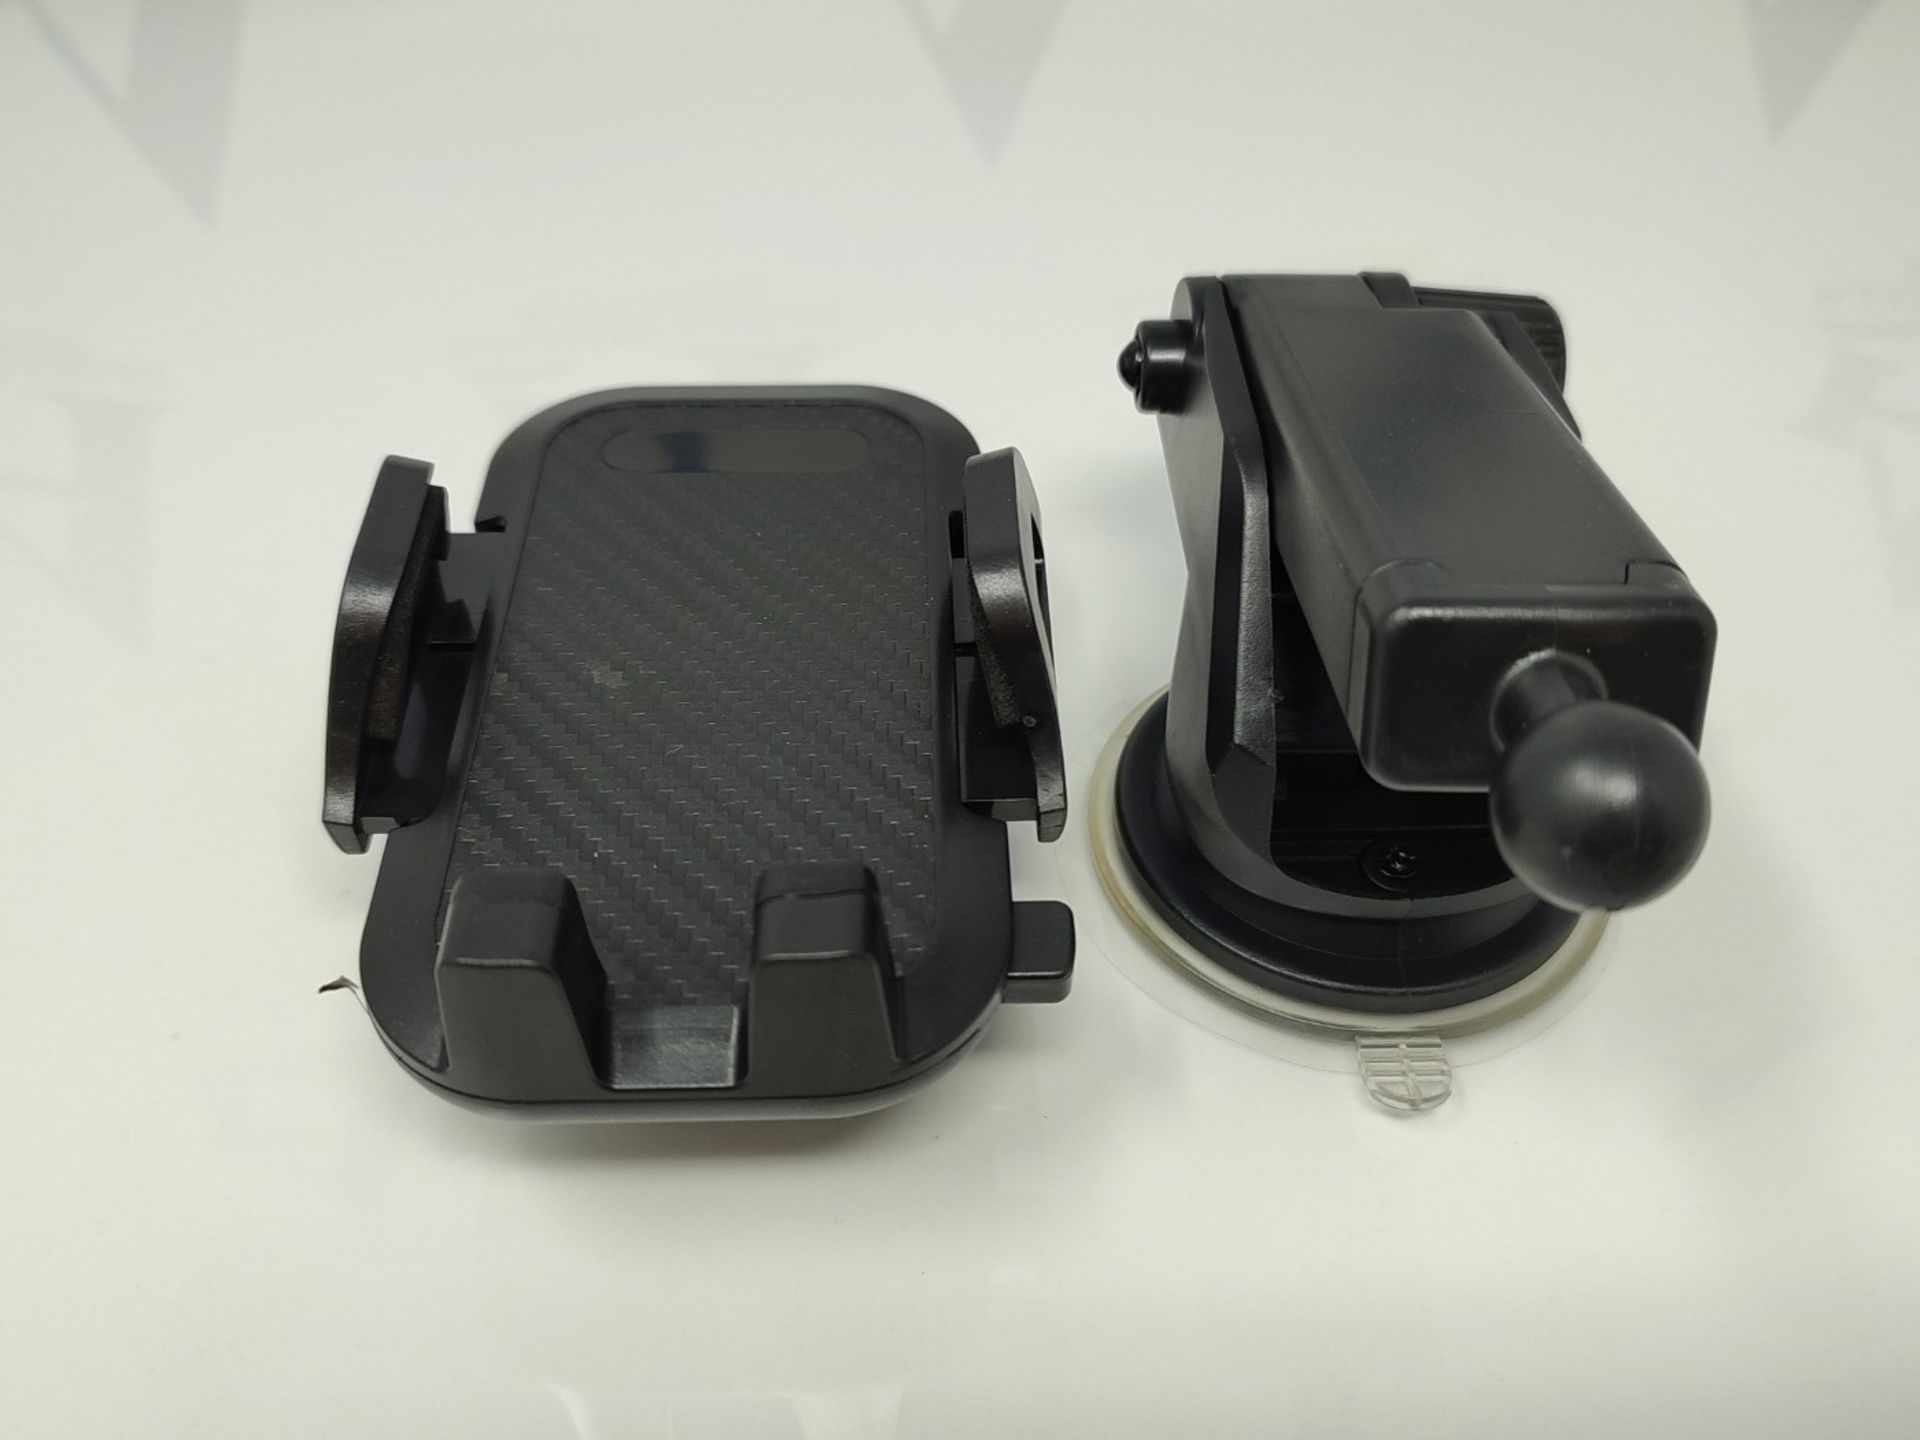 Xawy Car Phone Holder,Adjustable Car Phone Mount Cradle 360° Rotation - 2022 Upgraded - Image 2 of 2